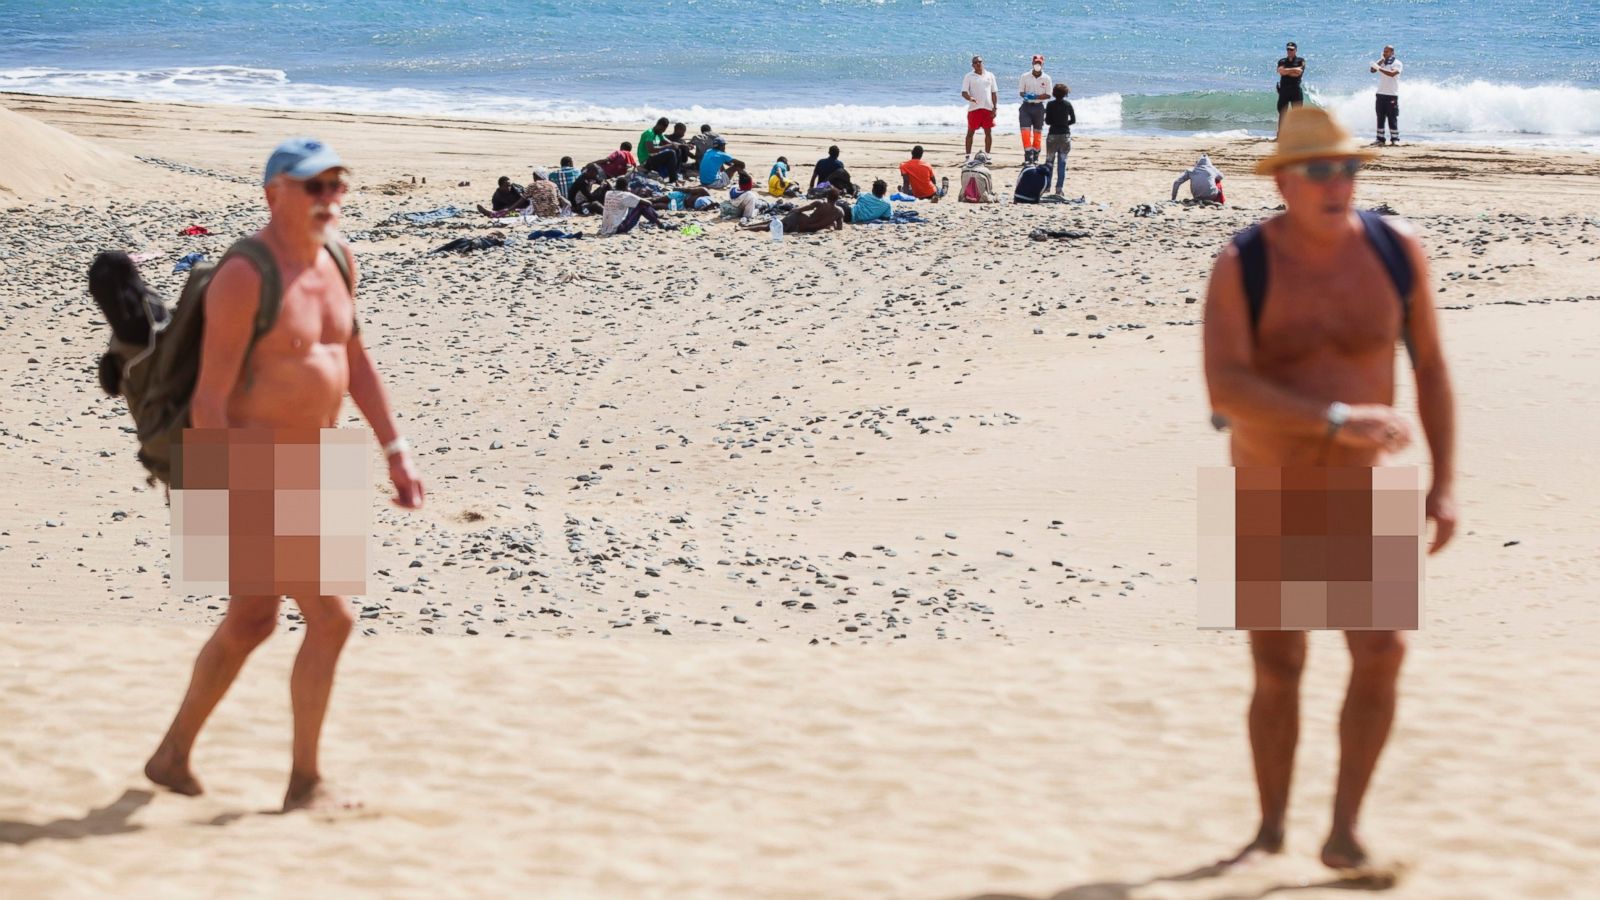 Adult Beach Nudist Image Gallery - Ebola Scare Hits Nudist Tourist Spot on Canary Islands - ABC News